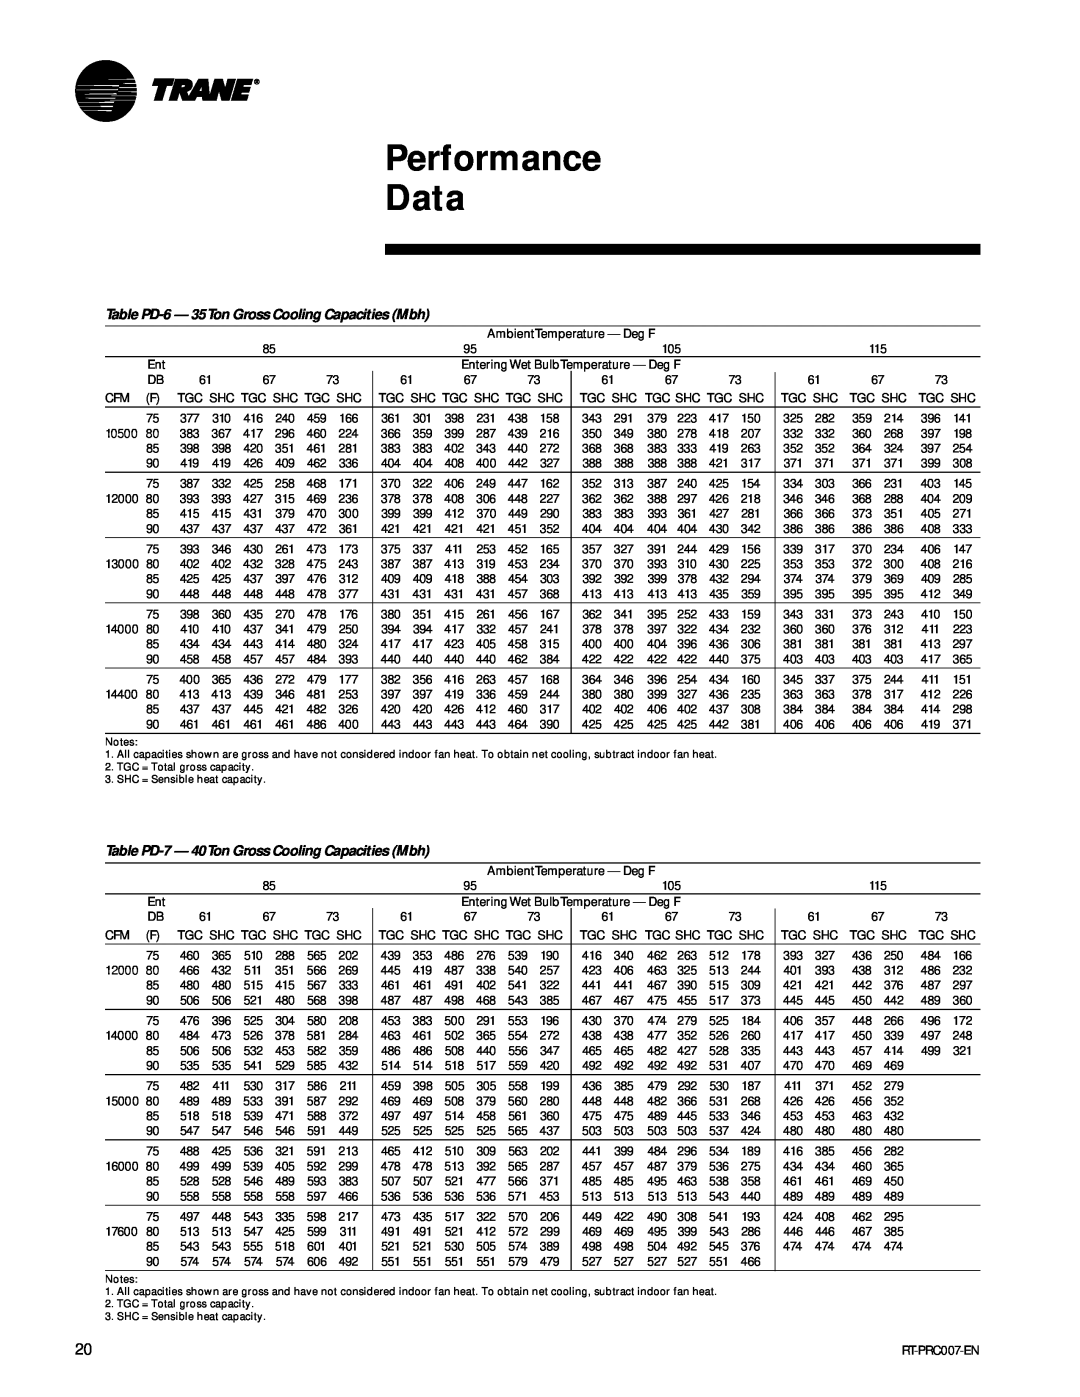 Trane RT-PRC007-EN manual Performance Data, Table PD-6- 35Ton Gross Cooling Capacities Mbh 